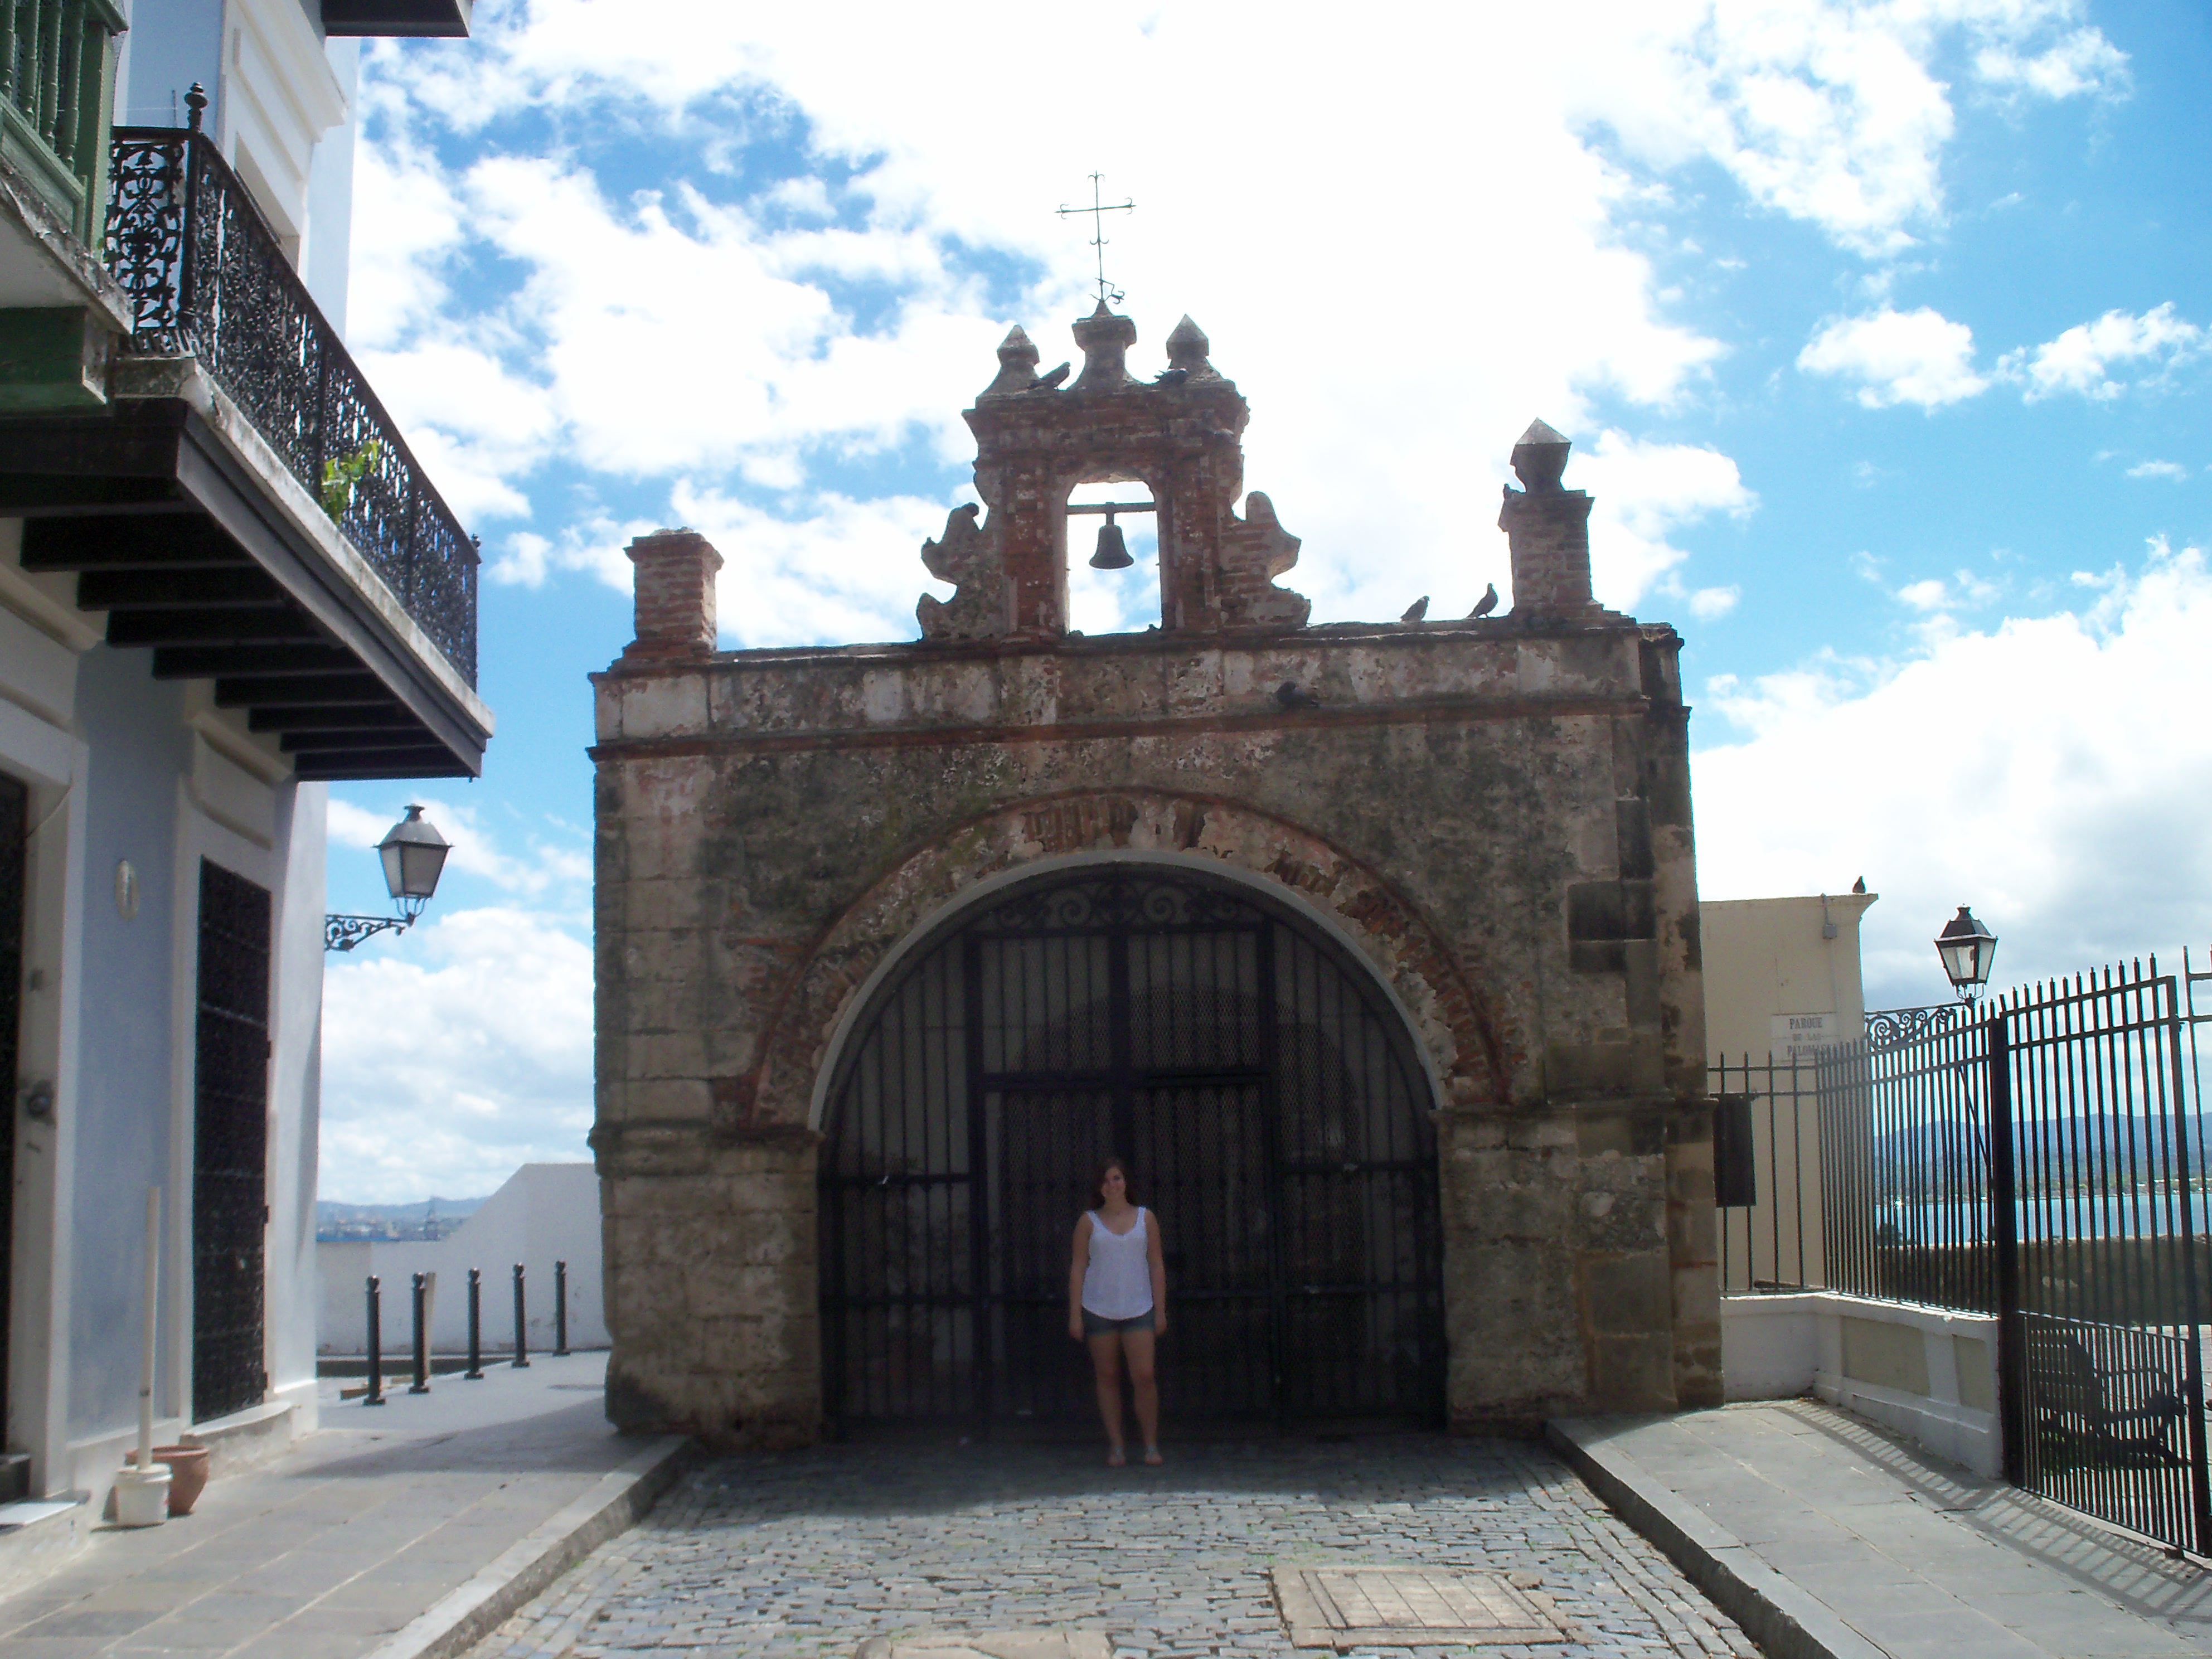 Spanish architecture in Old San Juan